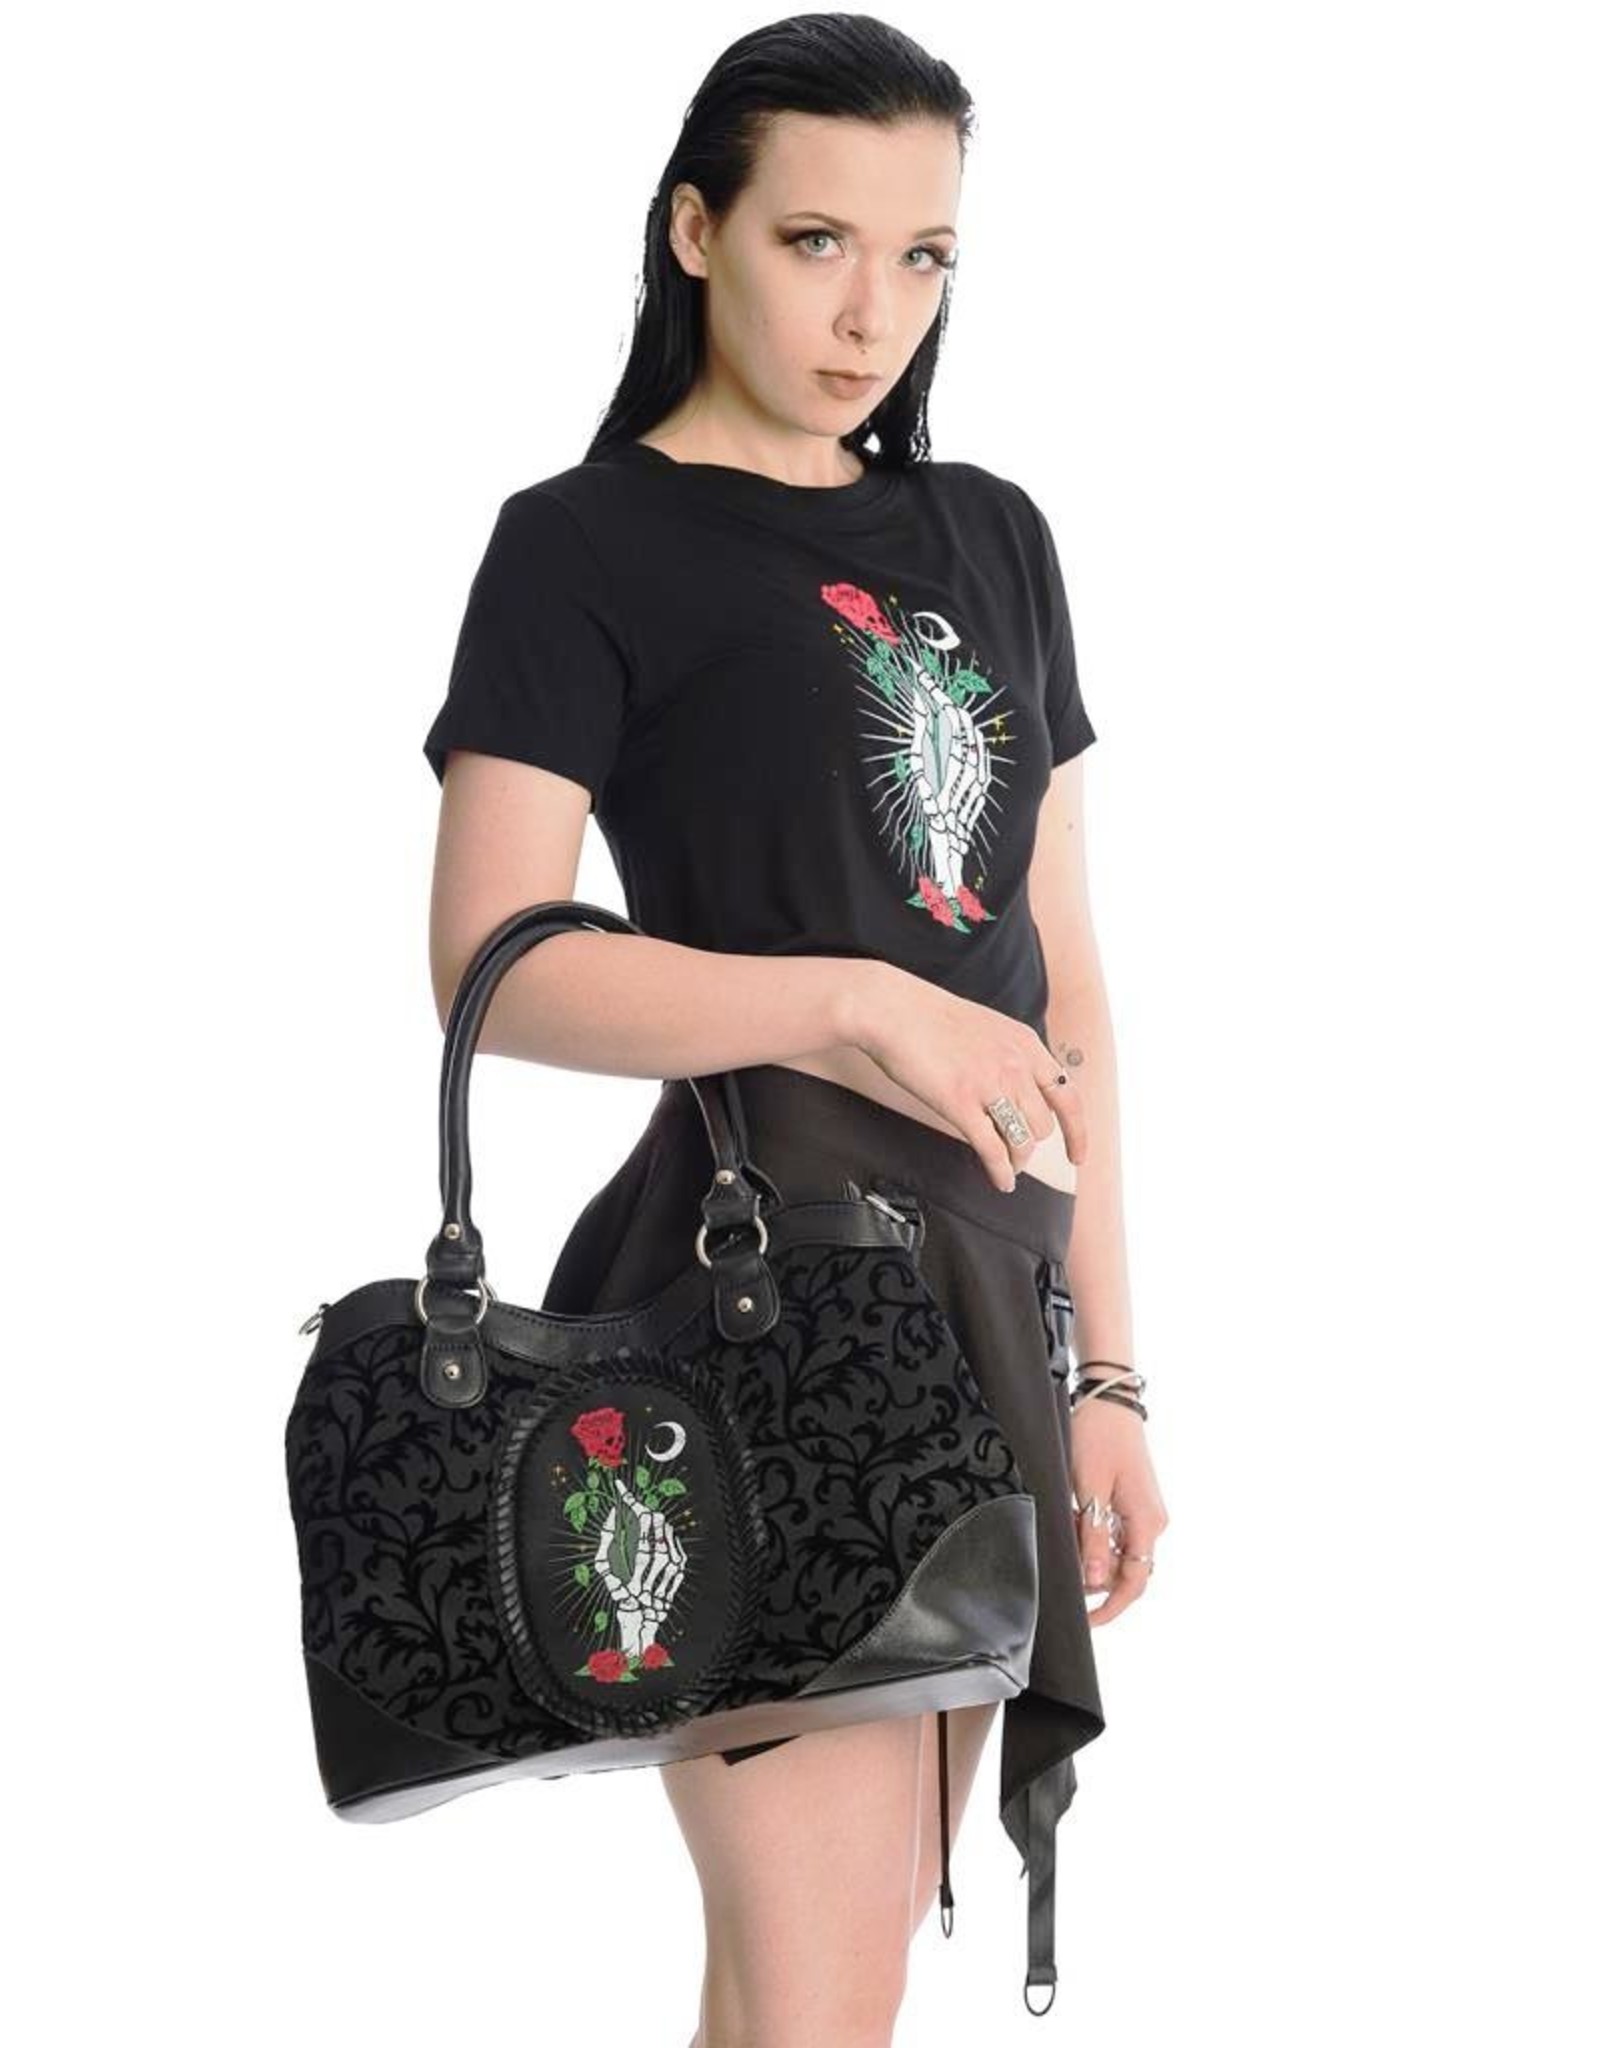 Banned Gothic bags Steampunk bags - Banned Ishtar Gothic Handbag